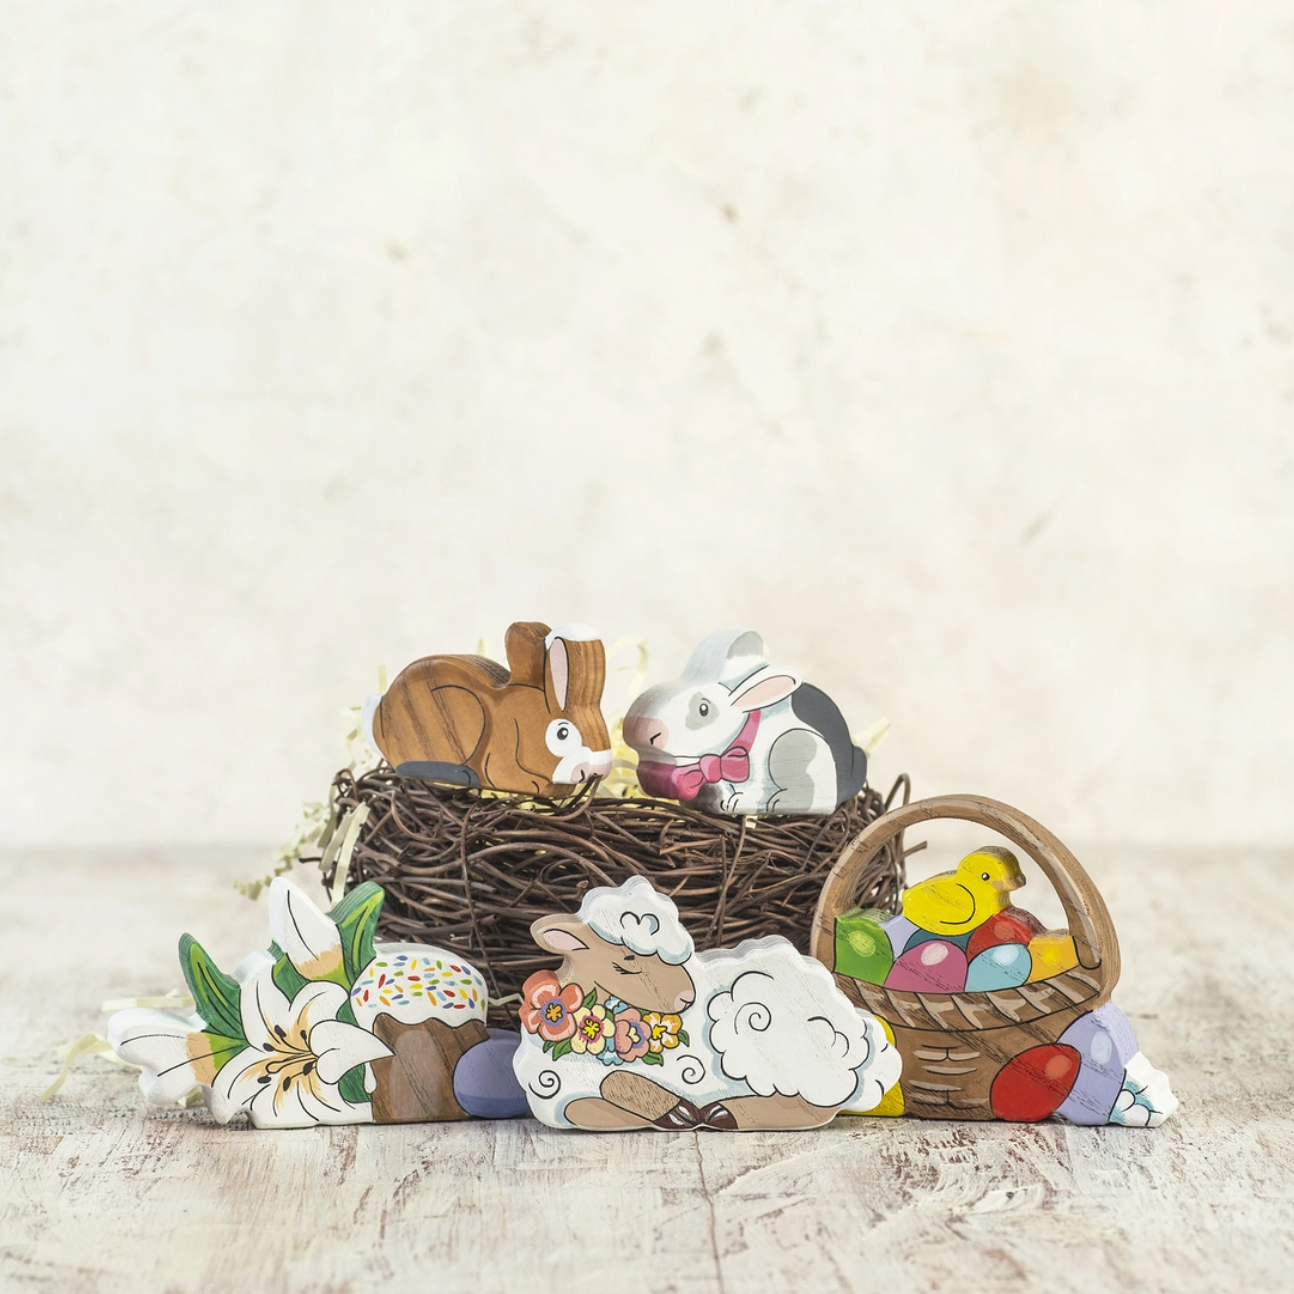 Wooden Caterpillar Easter Basket Figure (Chicks and Eggs)